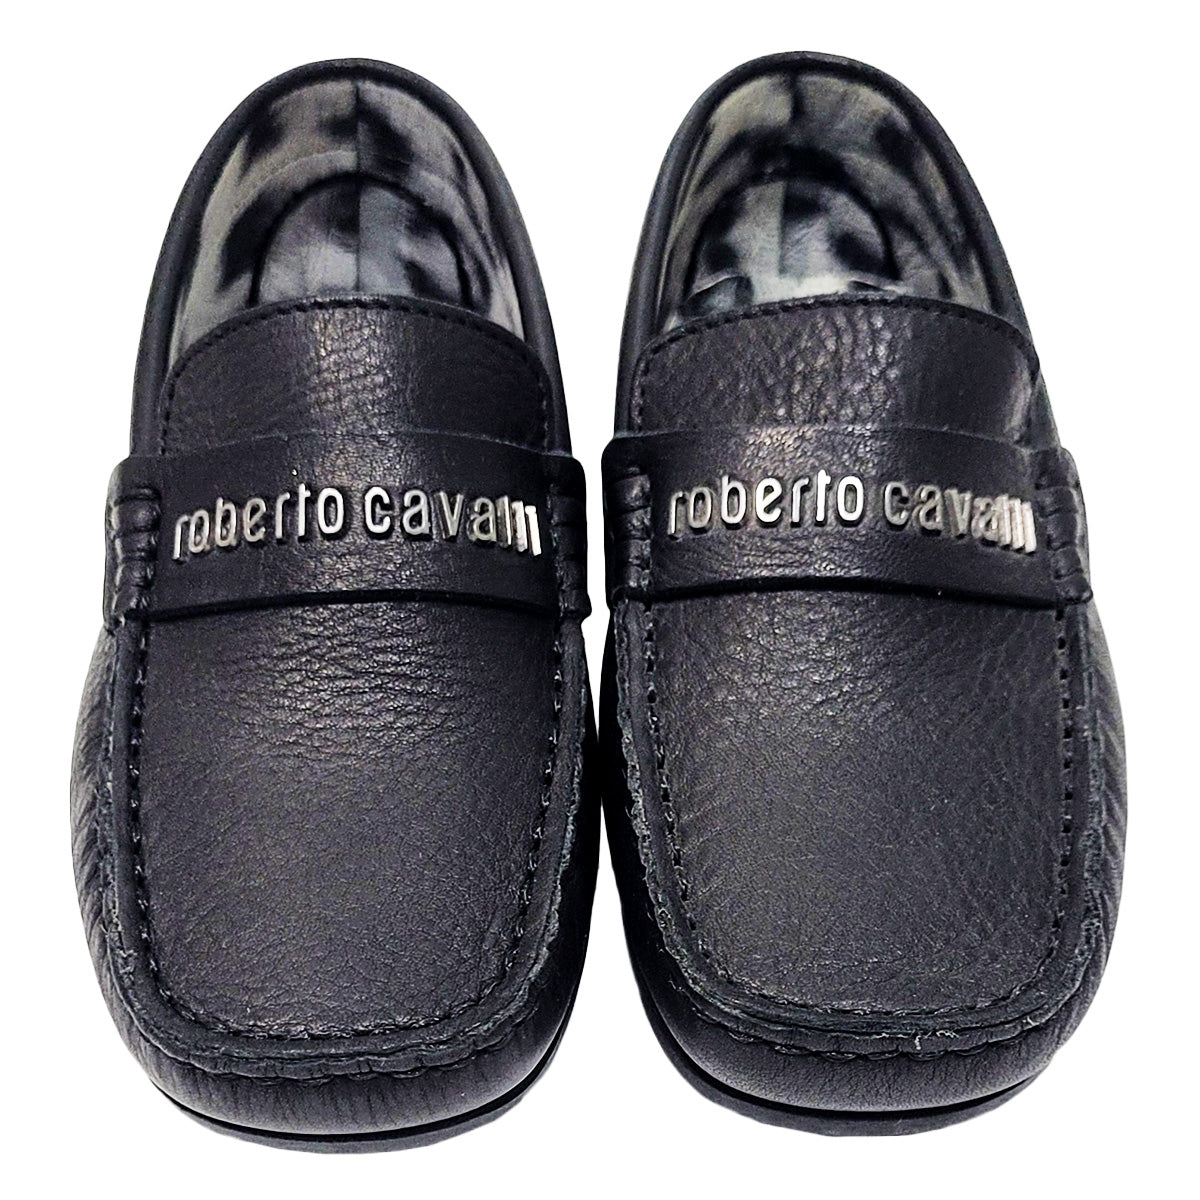 Roberto Cavalli Shoe